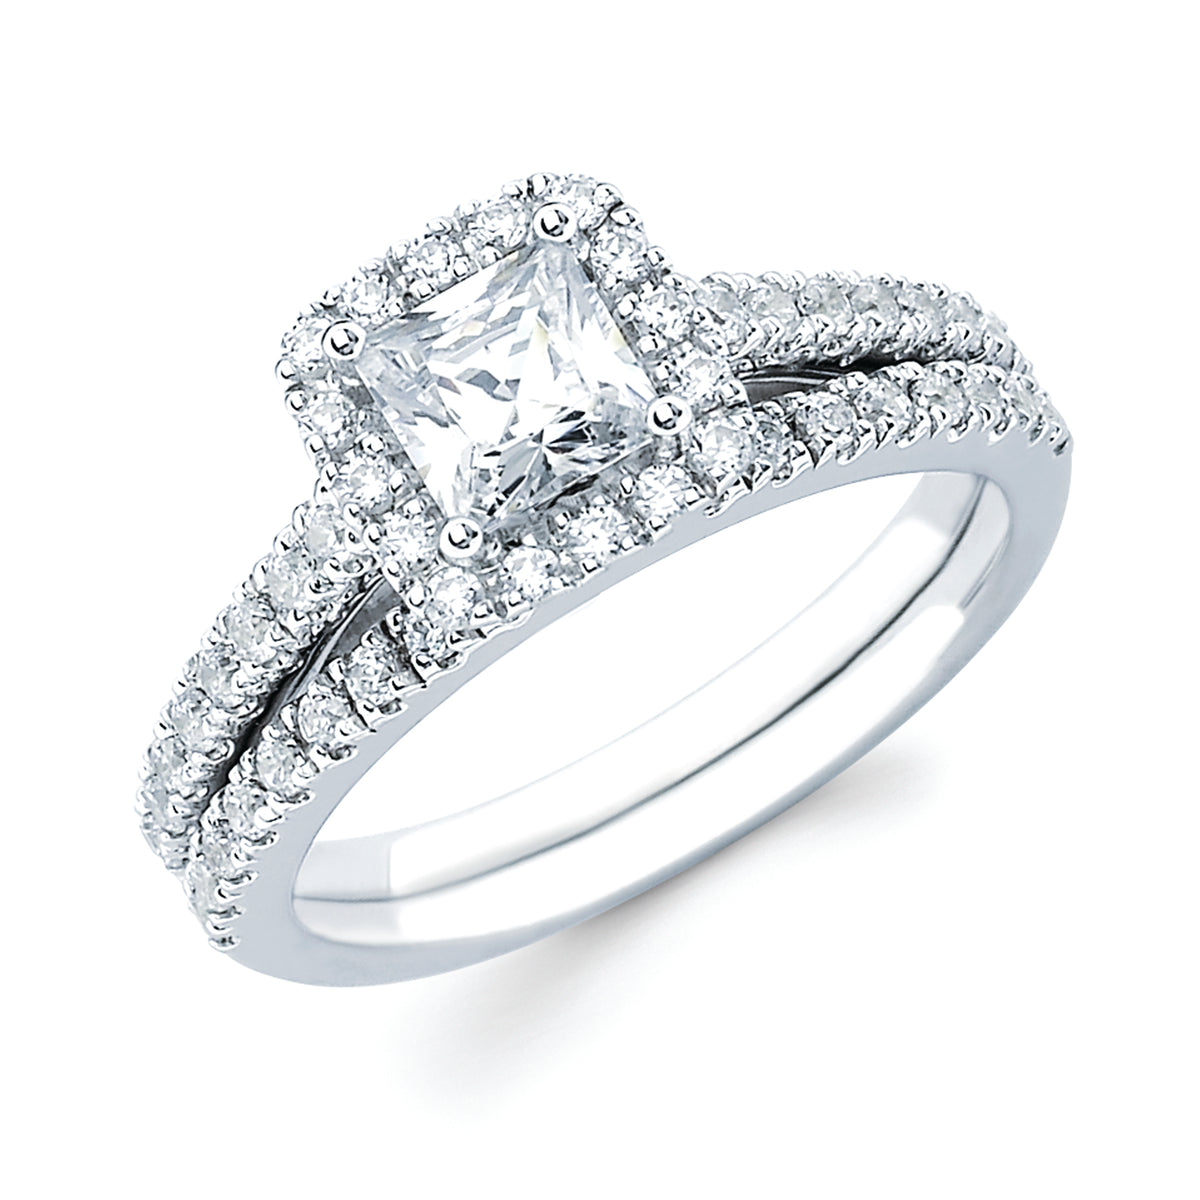 Halo Bridal: 1/3 Ctw. Diamond Halo Semi Mount available for 3/4 Ct. Princess Cut Center Diamond in 14K Gold